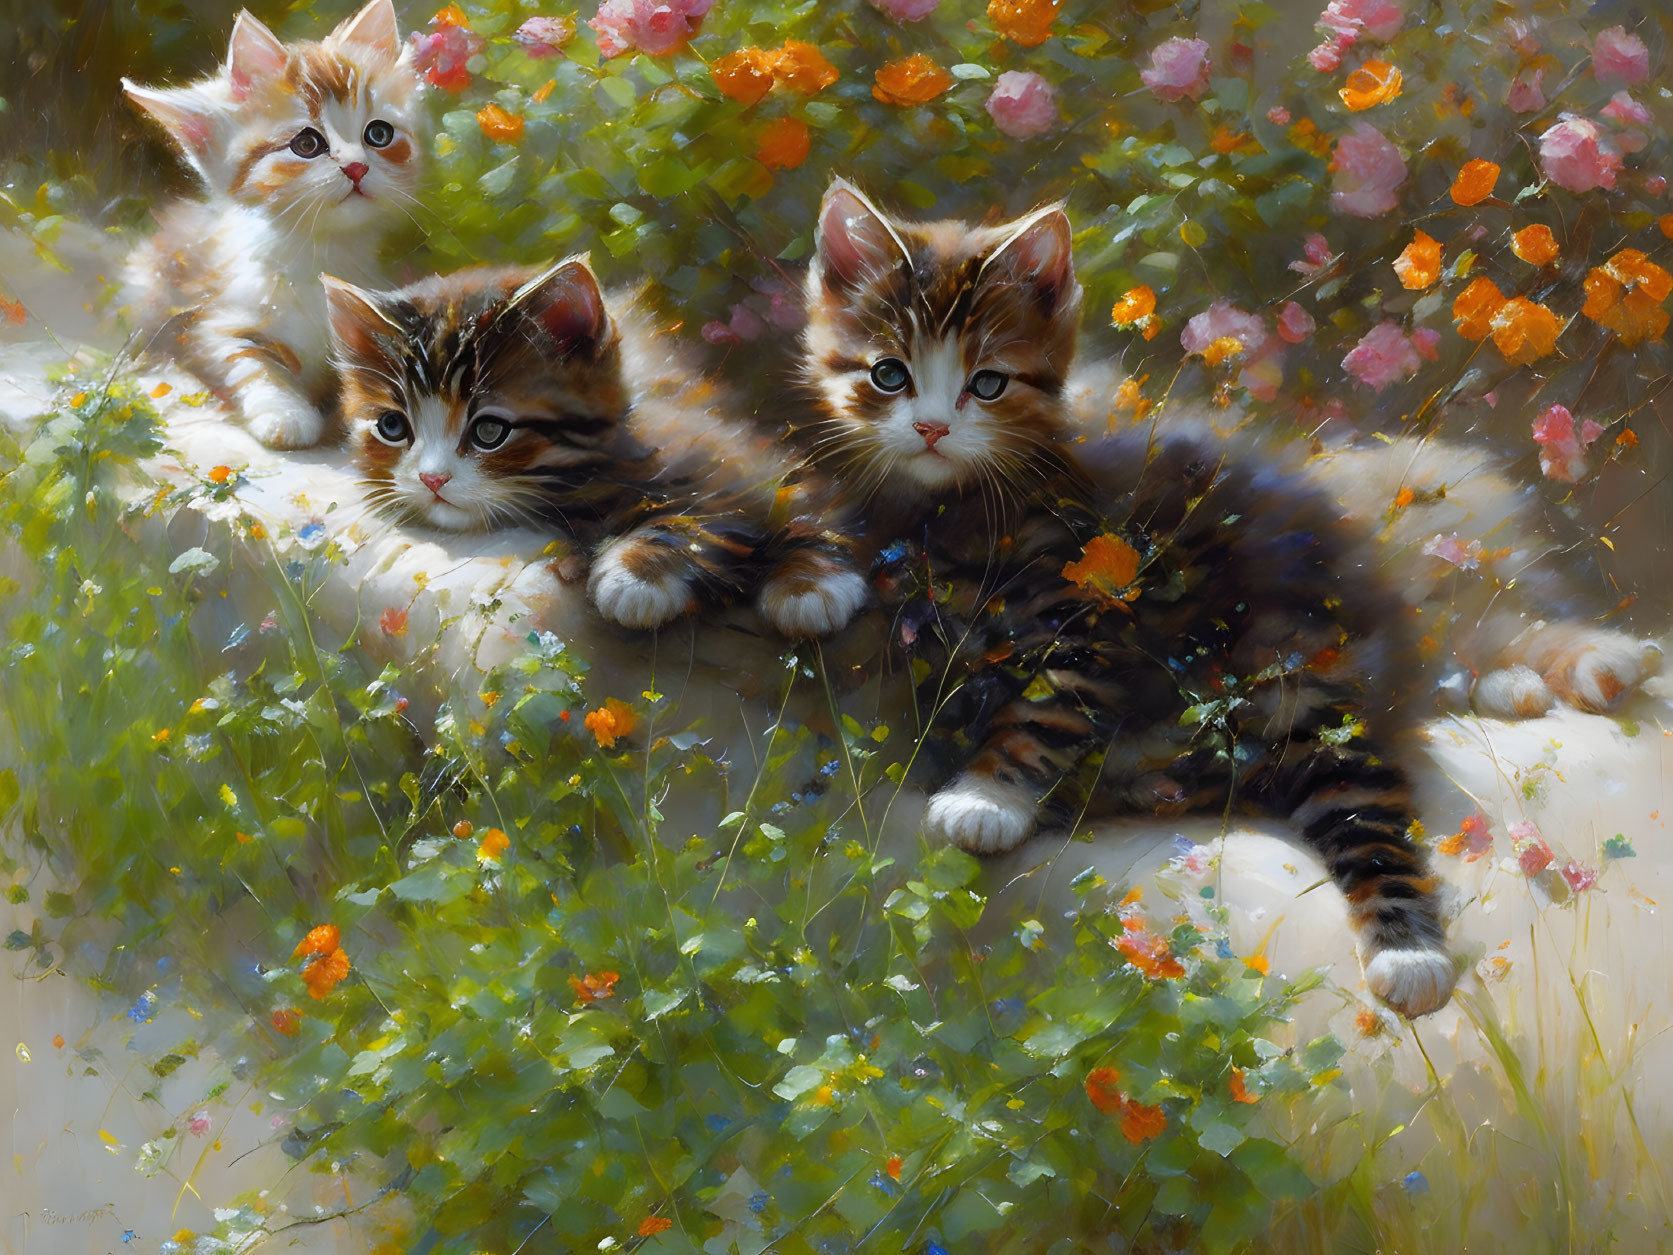 Three Kittens Relaxing in Blooming Garden